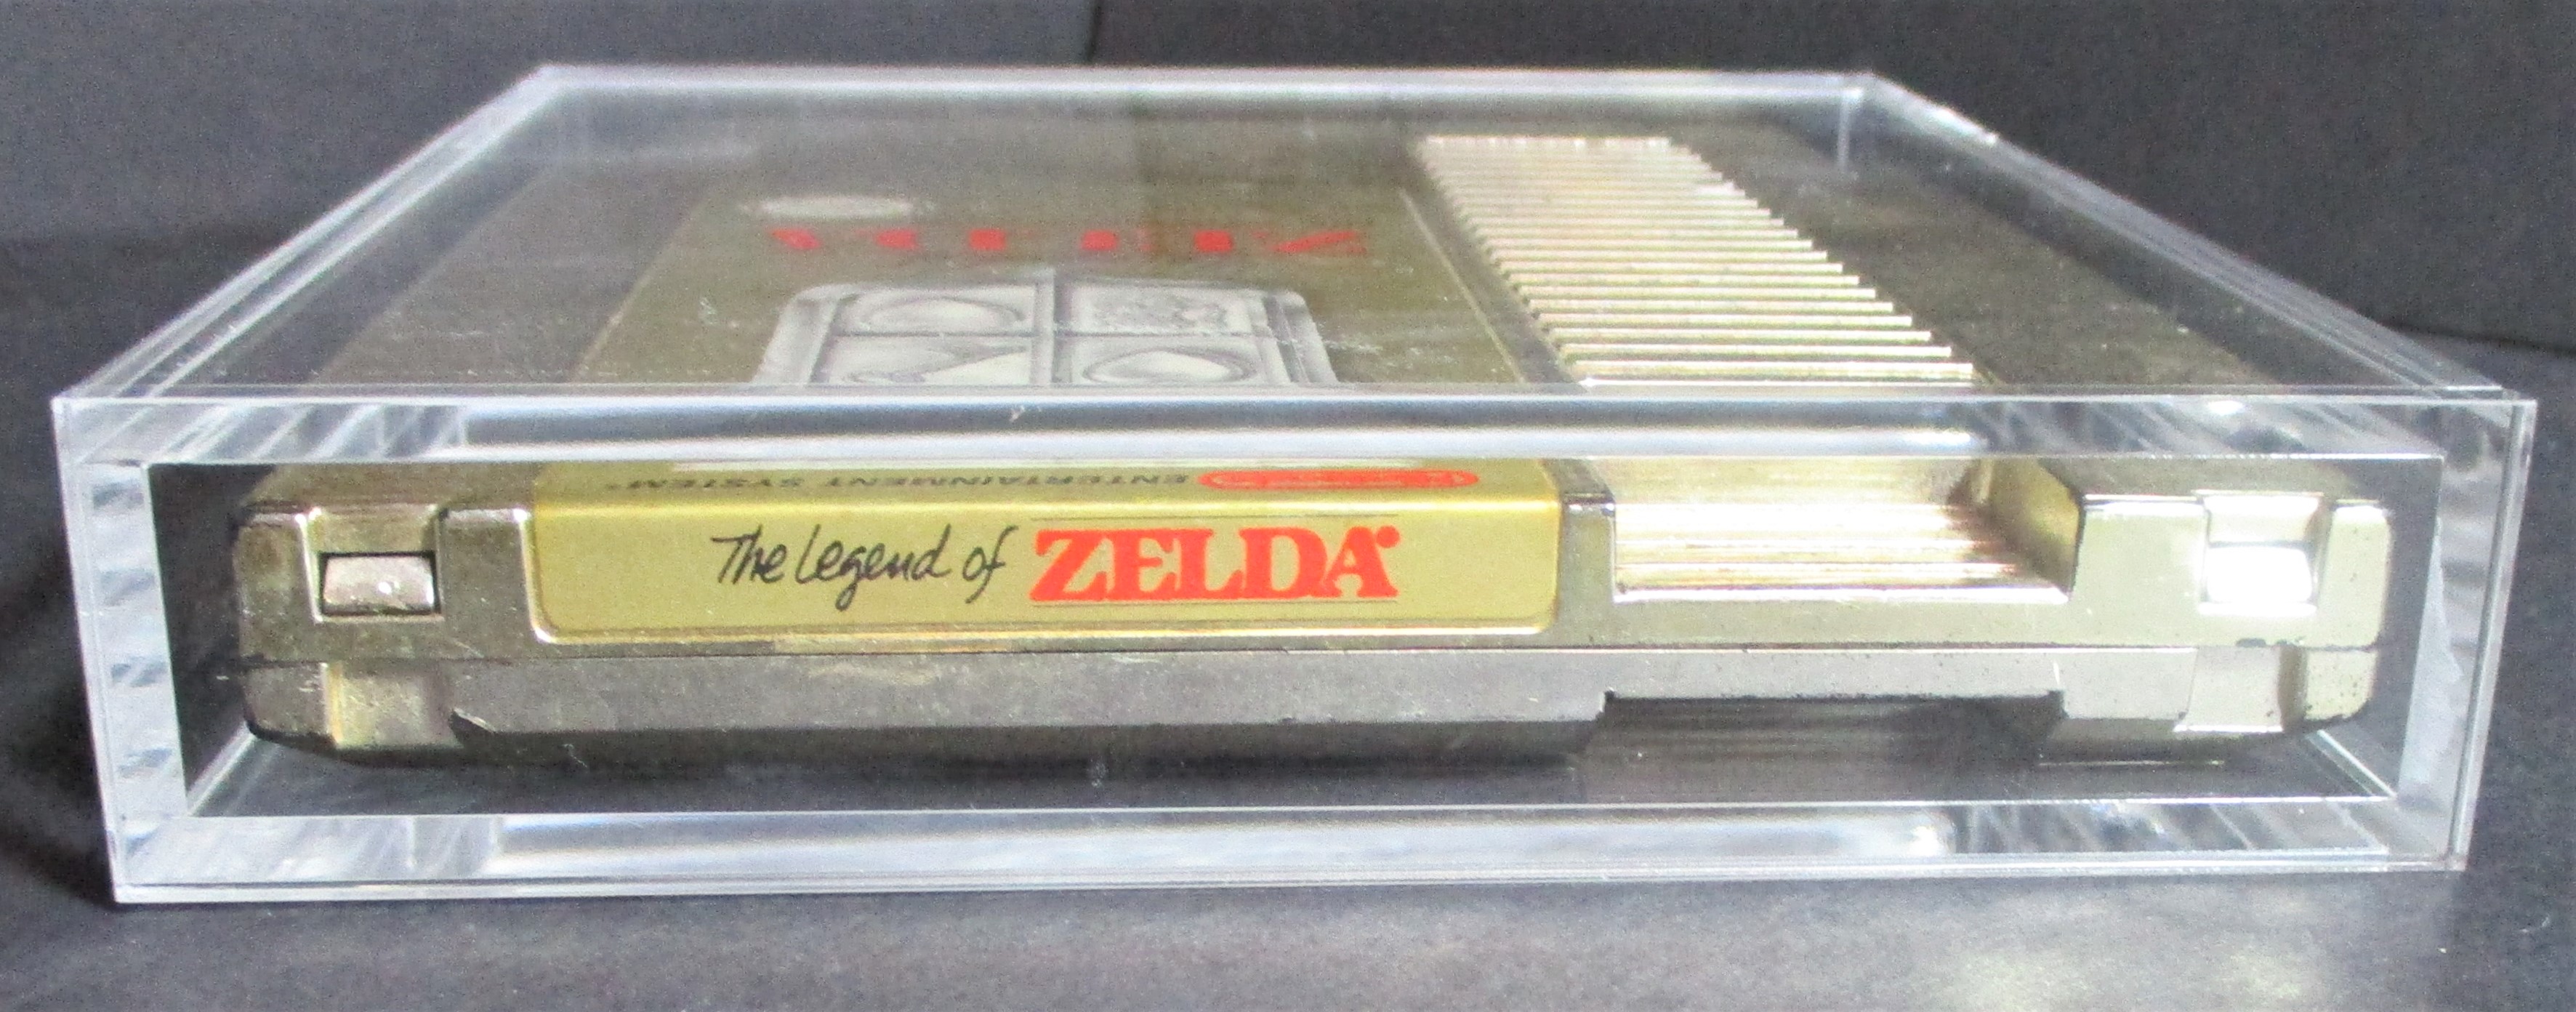 NES Loose Cartridge Acrylic Display Guard (60032)